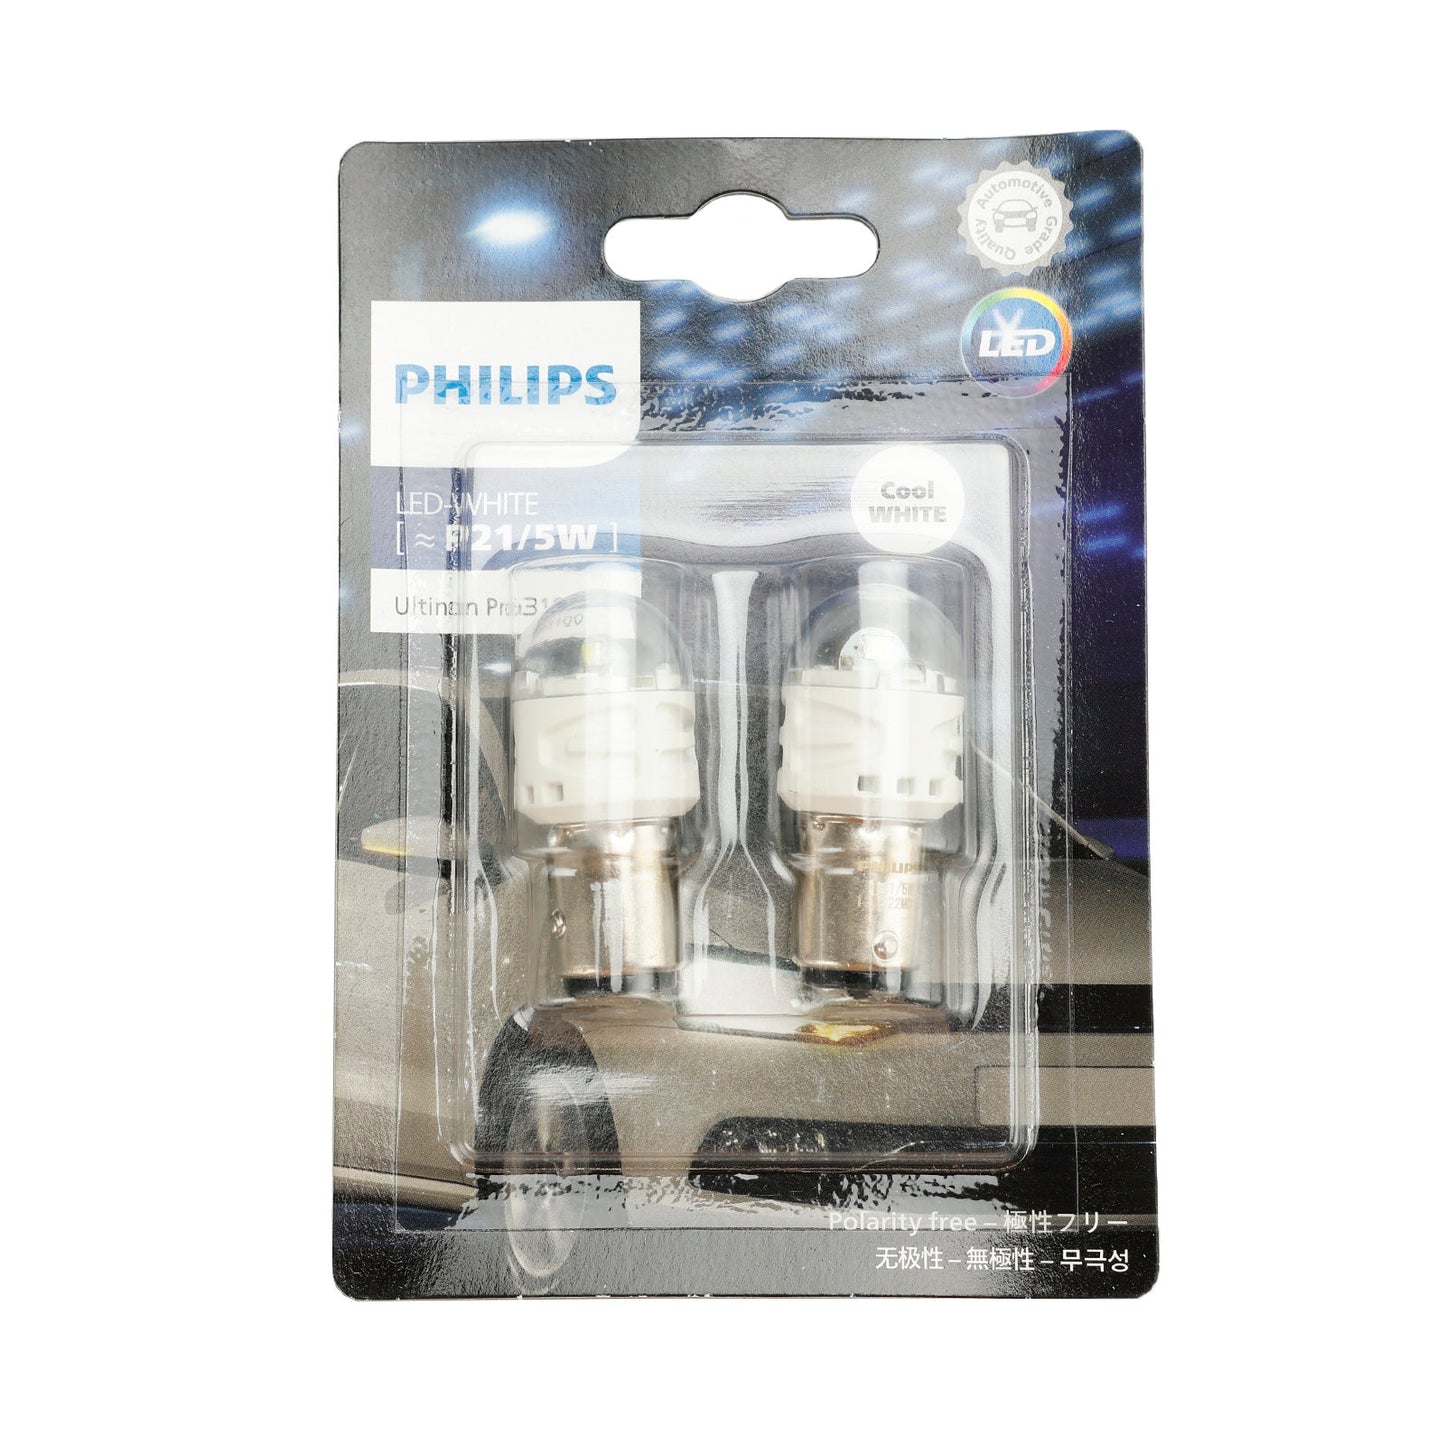 Für Philips 11499CU31B2 Ultinon Pro3100 LED-WEISS P21/5W 6000K BAY15d